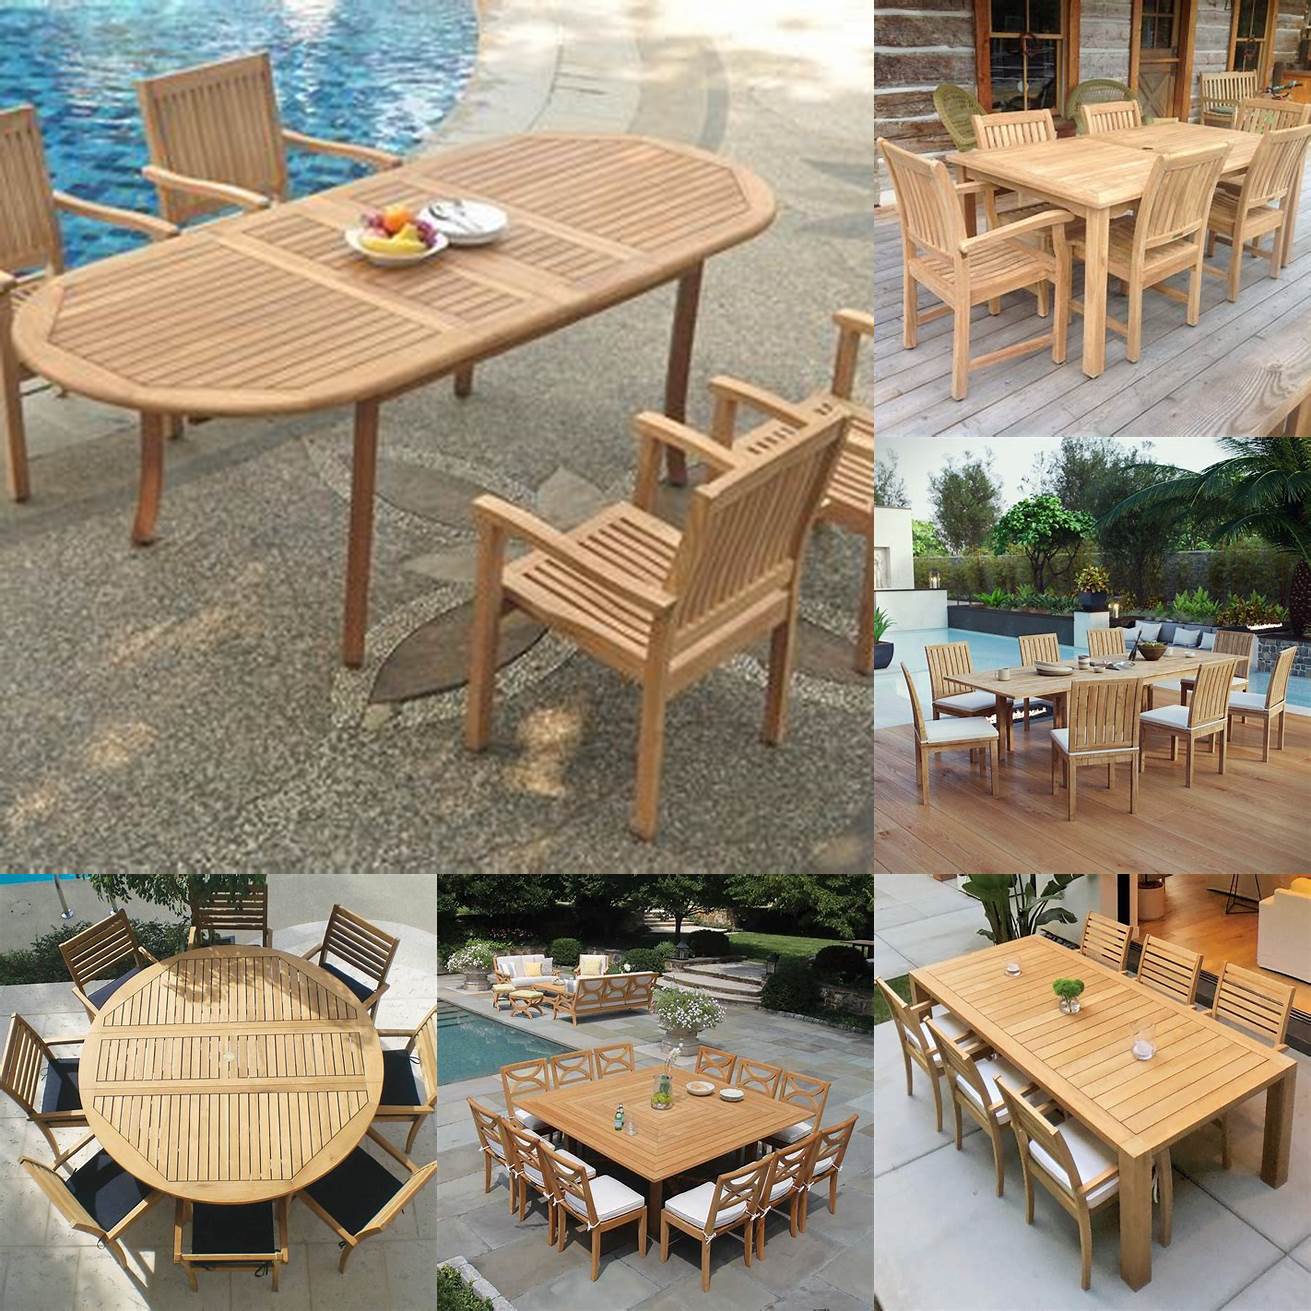 A table setting featuring teak furniture